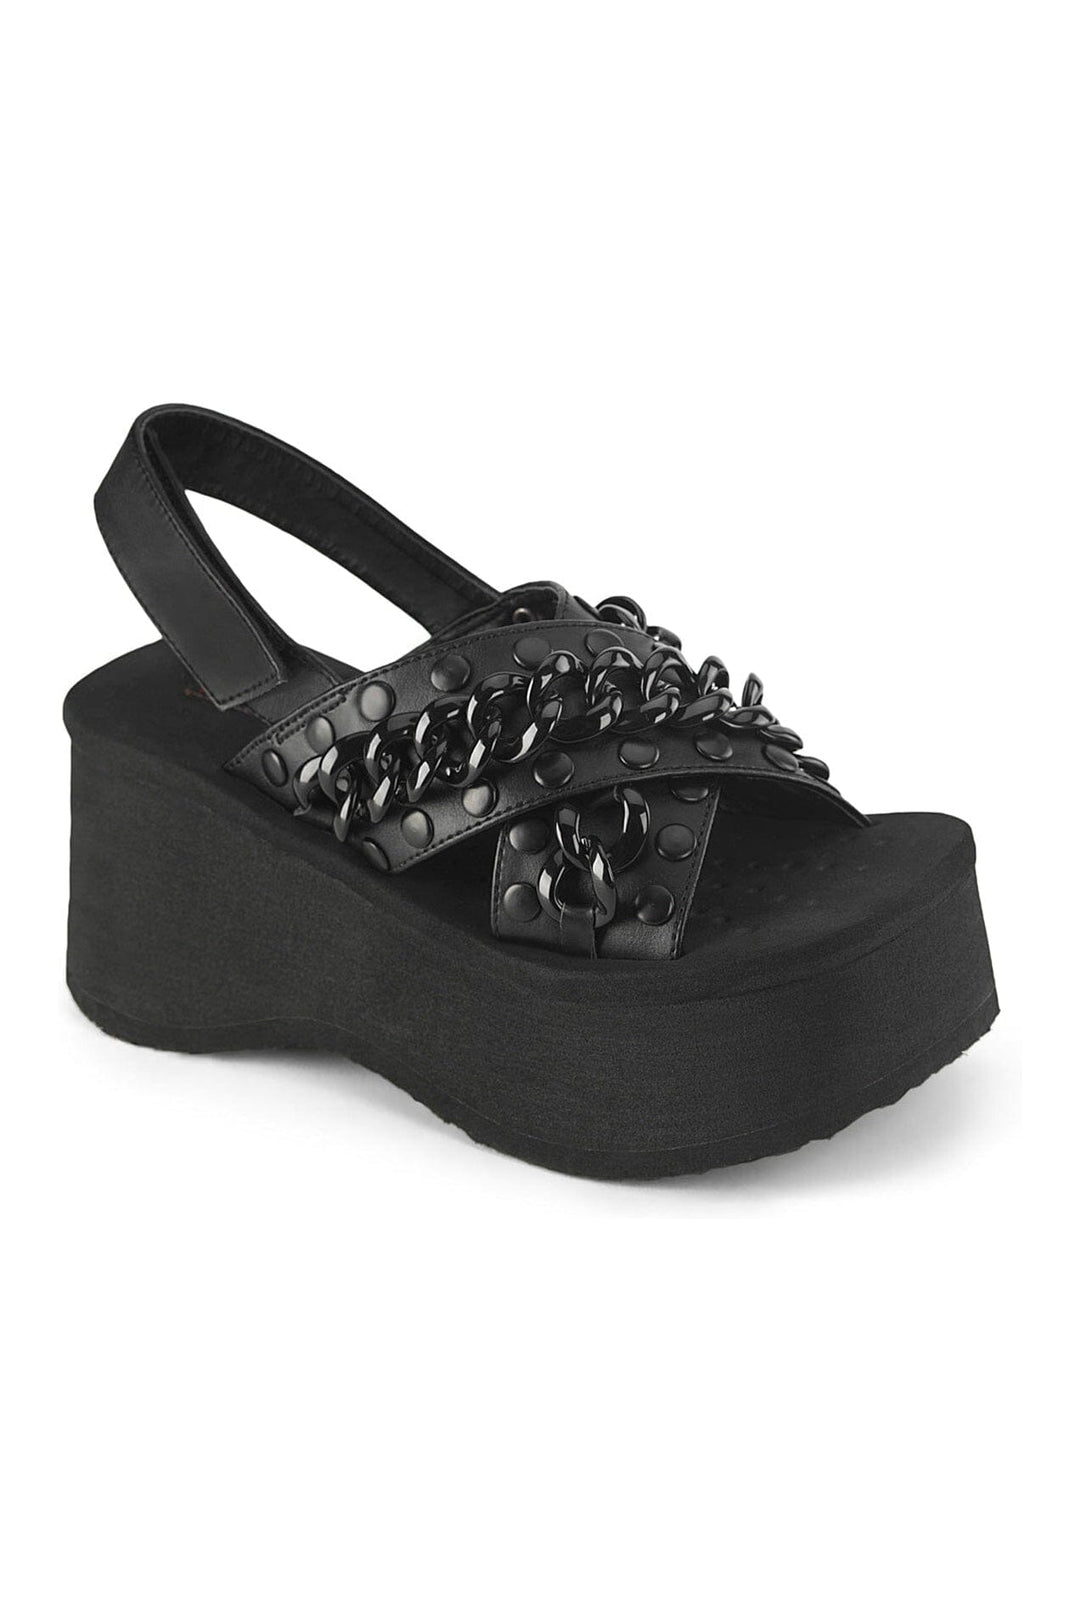 FUNN-12 Black Vegan Leather Sandal-Sandals-Demonia-Black-10-Vegan Leather-SEXYSHOES.COM